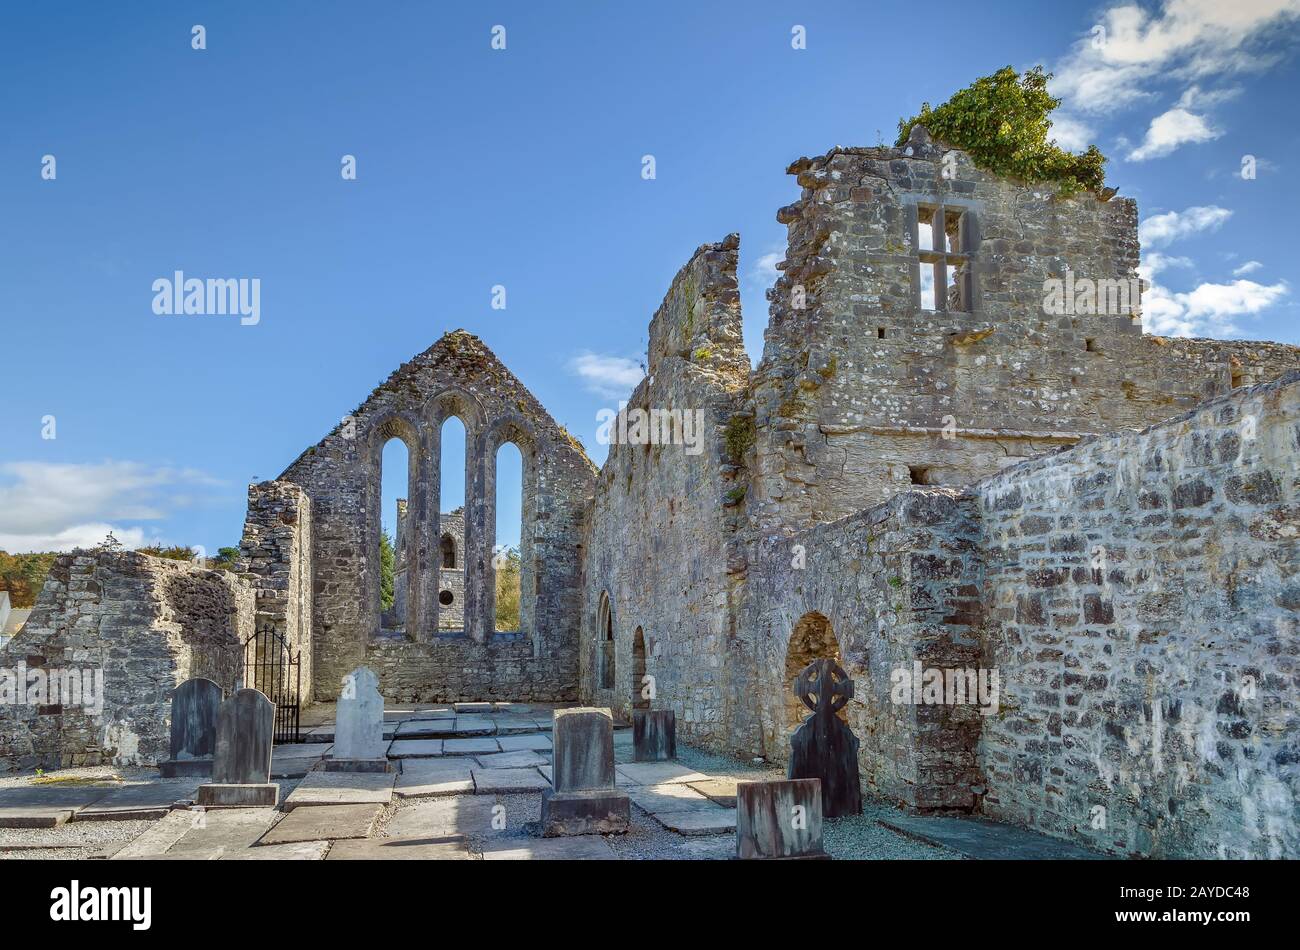 Cong Abbey, Ireland Stock Photo